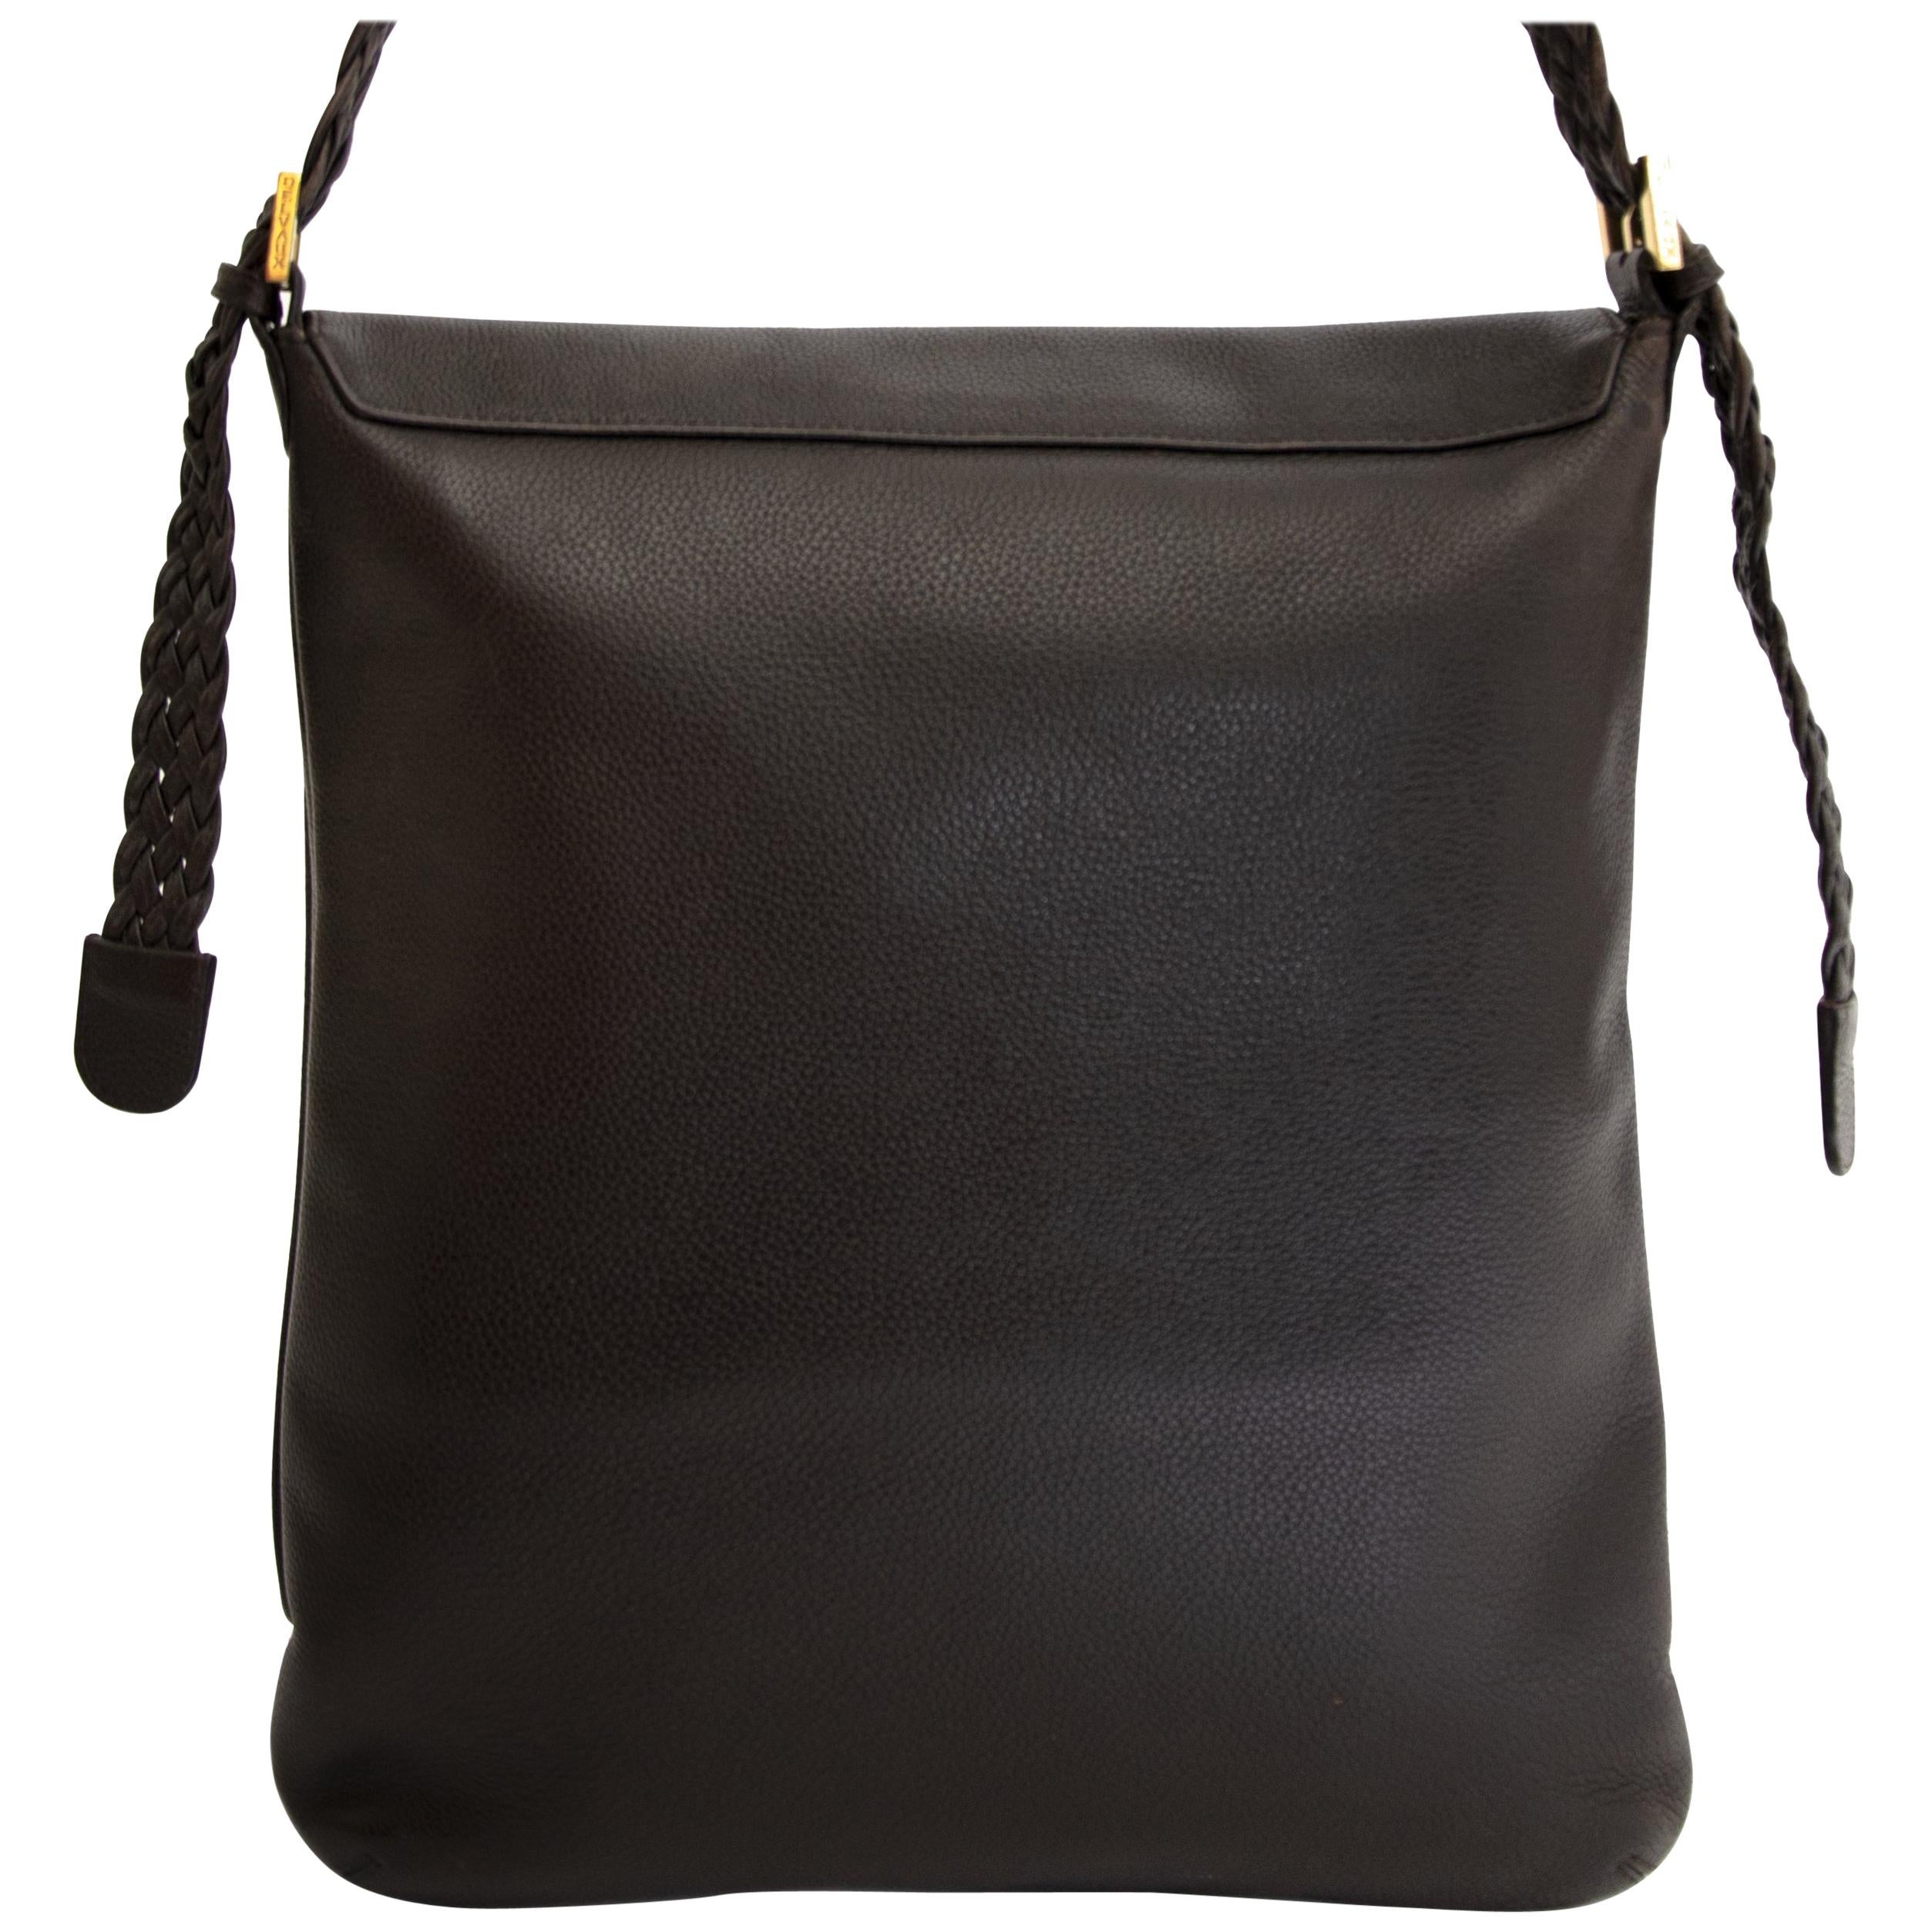 Delvaux Louise Baudrier Brown Leather Shoulder Bag 